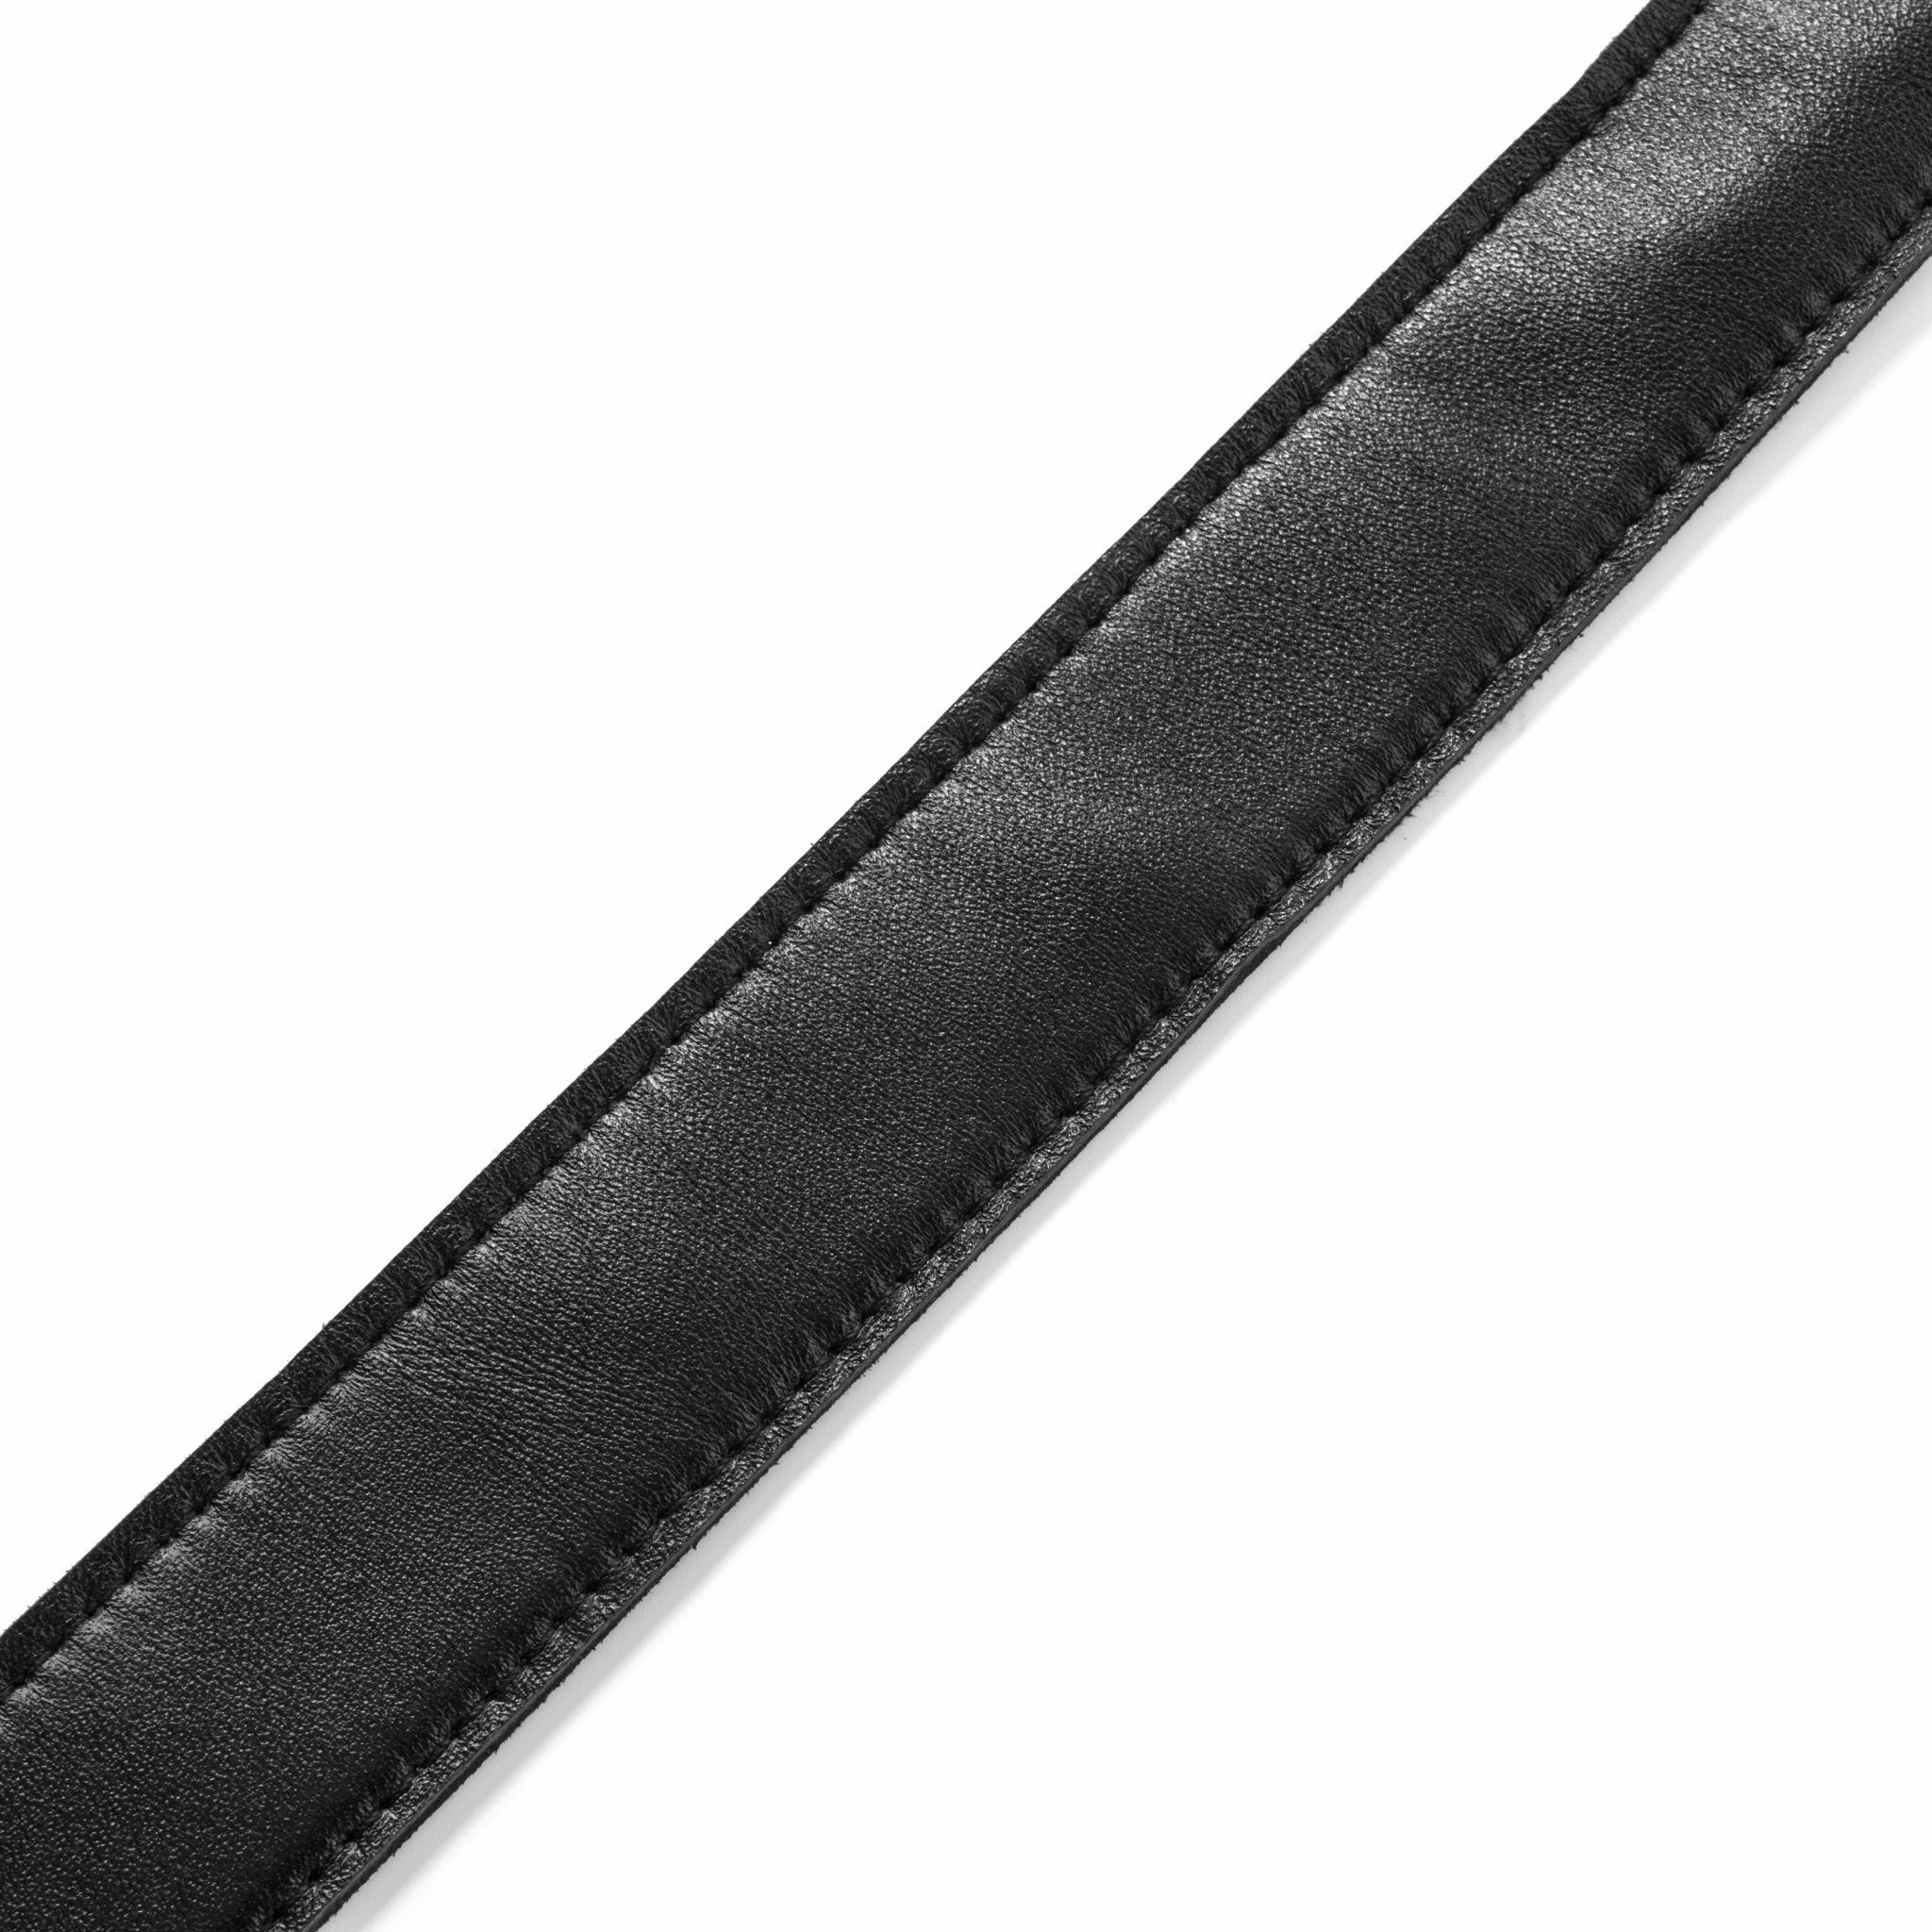 Tamrac Quick Release Strap - Black Leather Microfiber